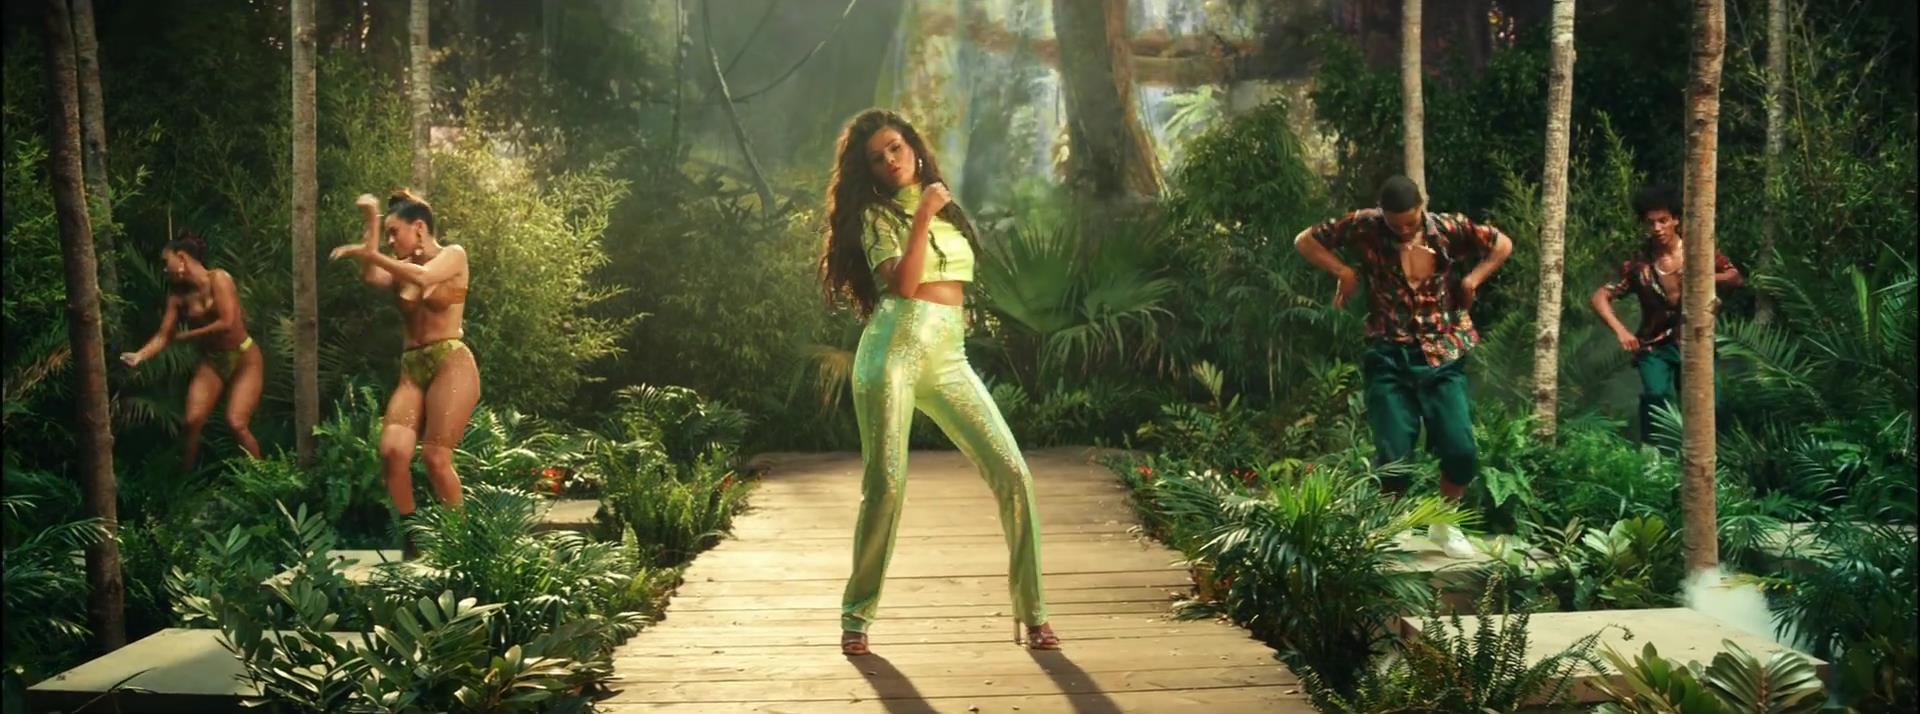 Selena Gomez & Cardi B Sexy (50 Pics + Video)